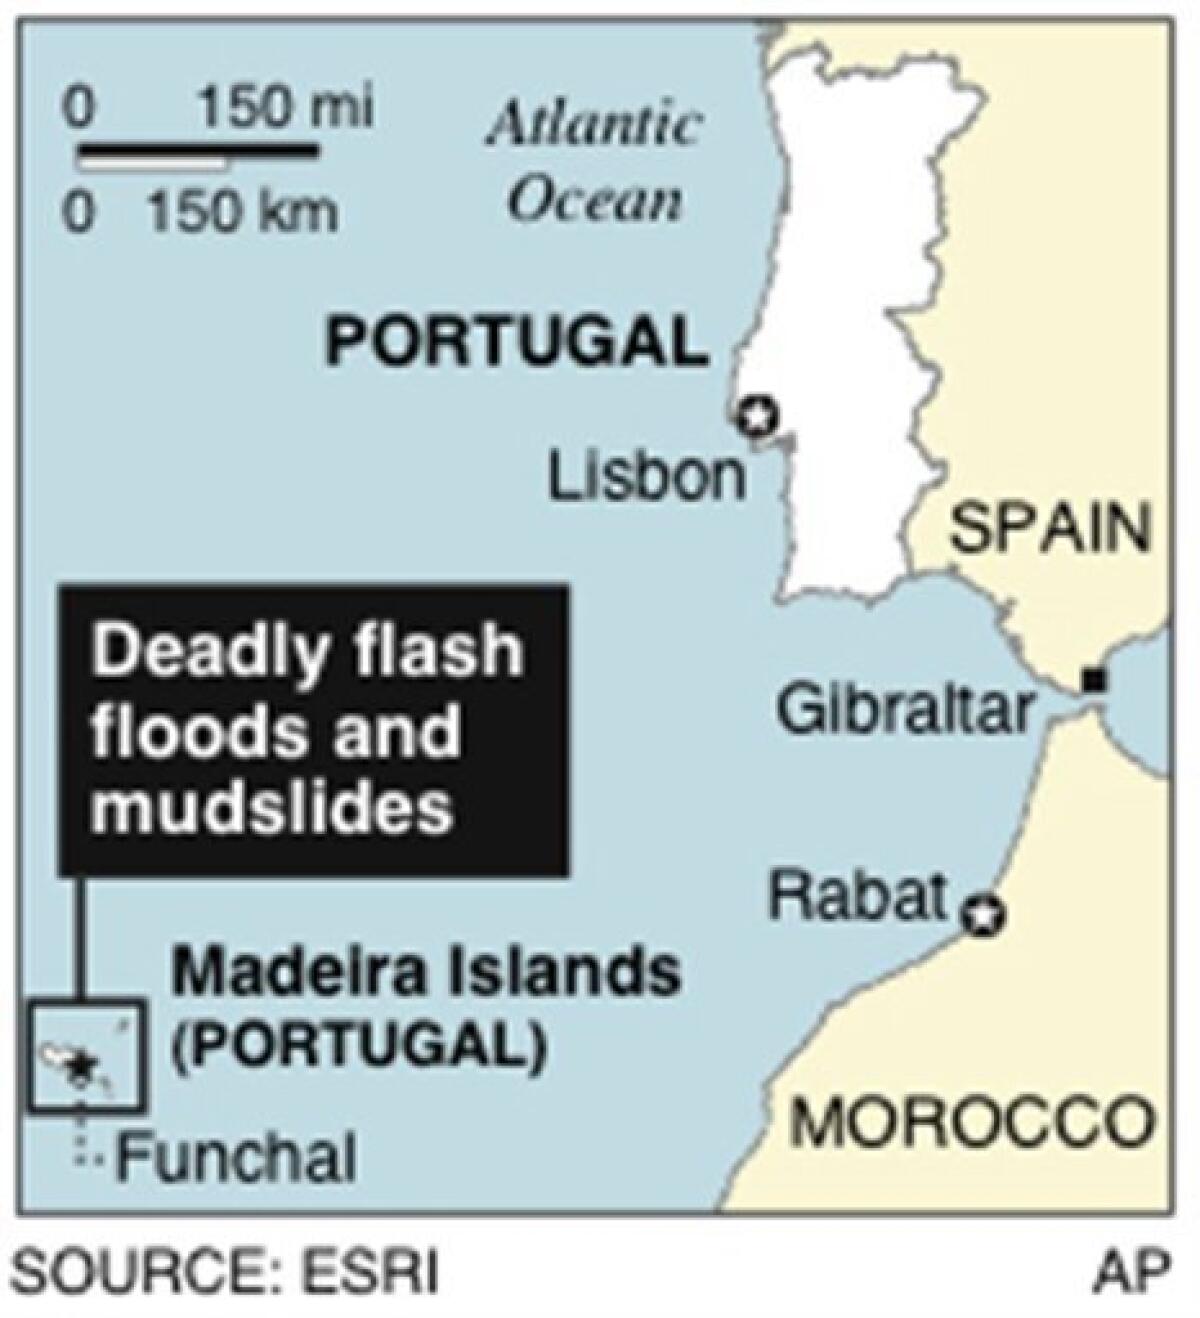 Map locates Portugal's Madeira Islands